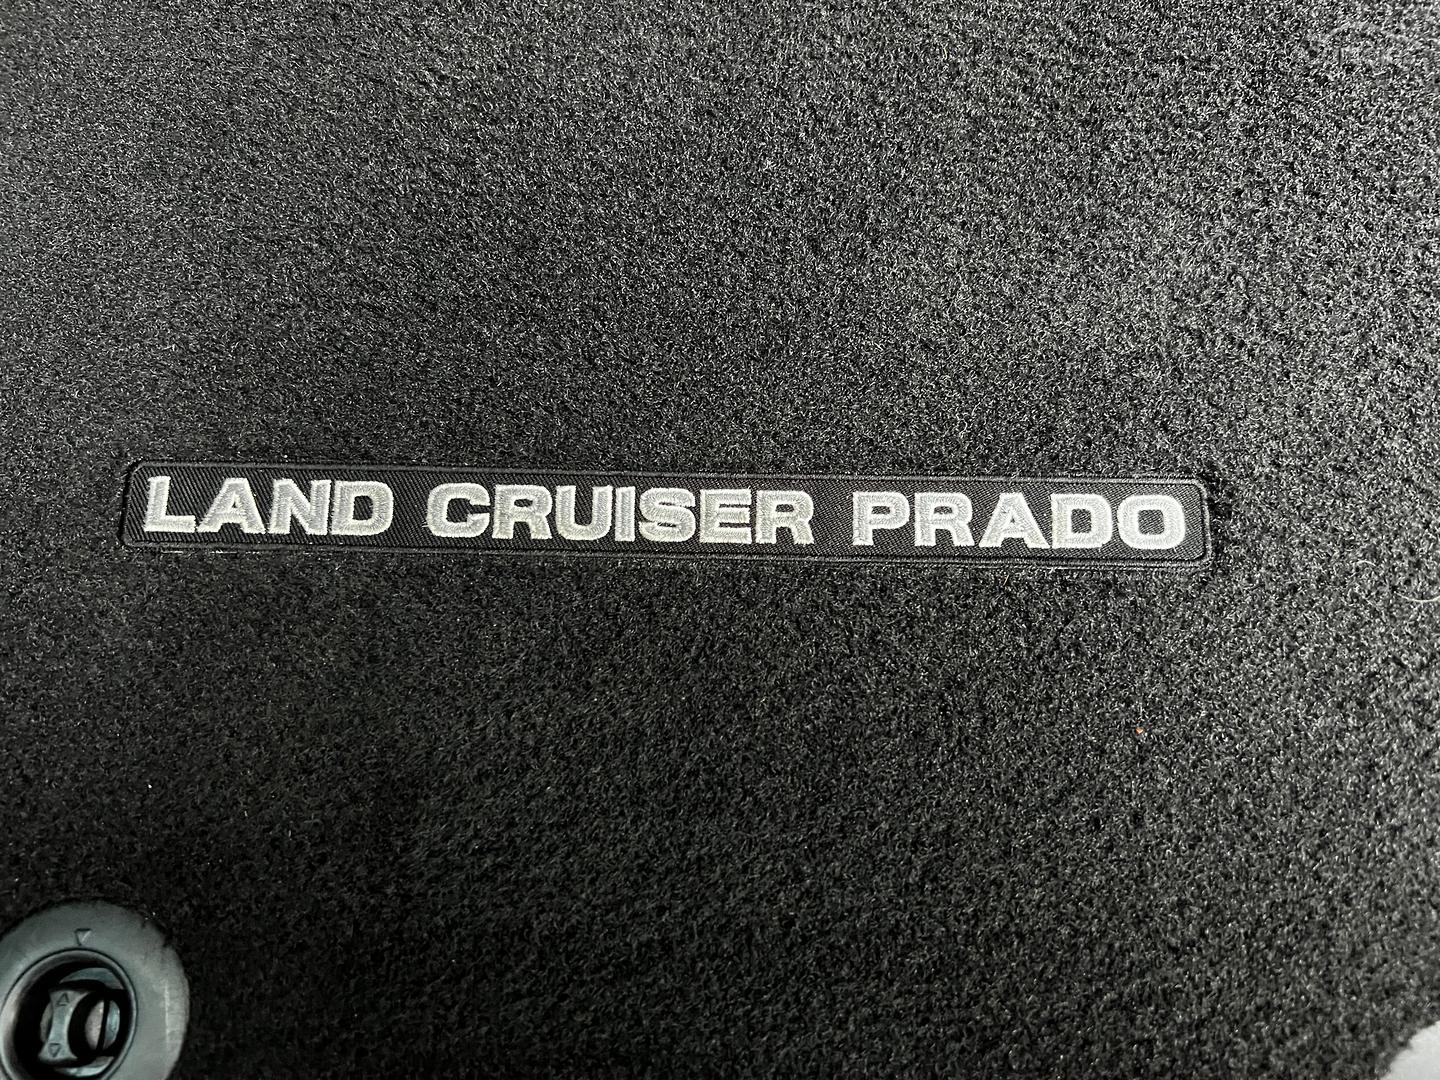 2018 Toyota Landcruiser Prado Image 17